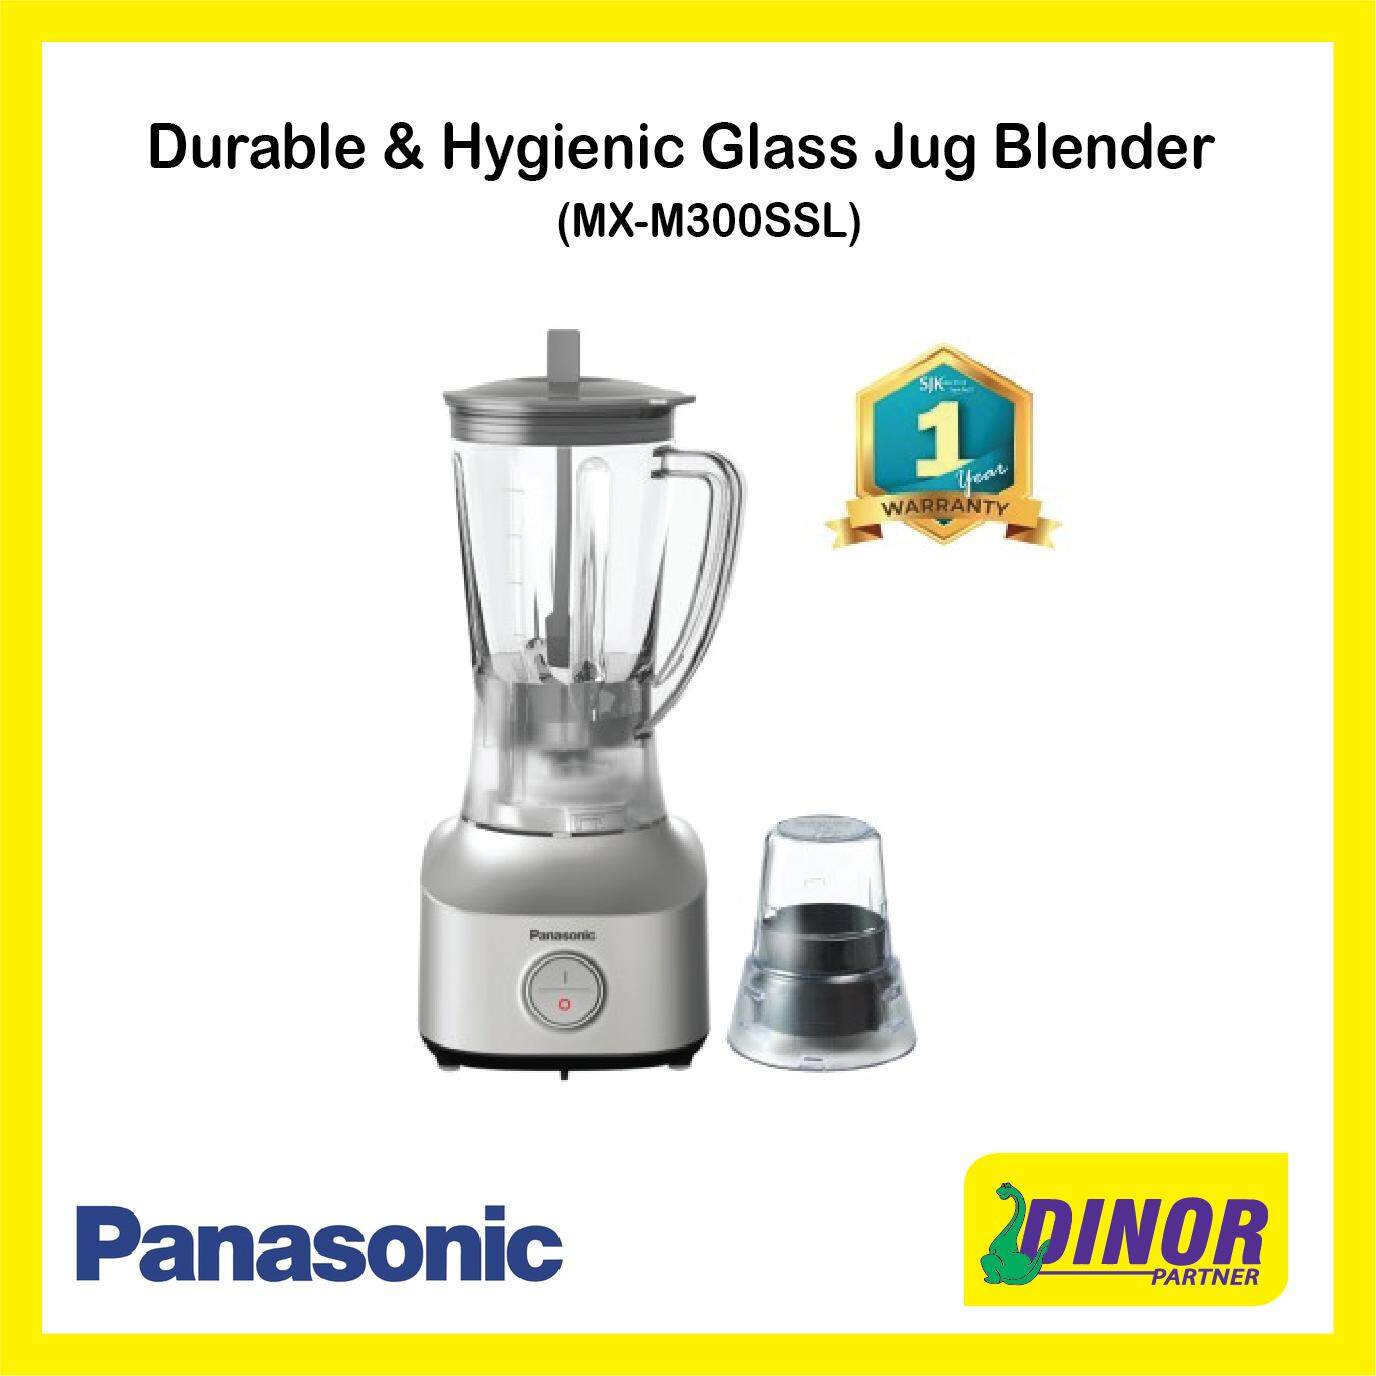 Panasonic Durable & Hygienic Glass Jug Blender (MX-M300SSL)